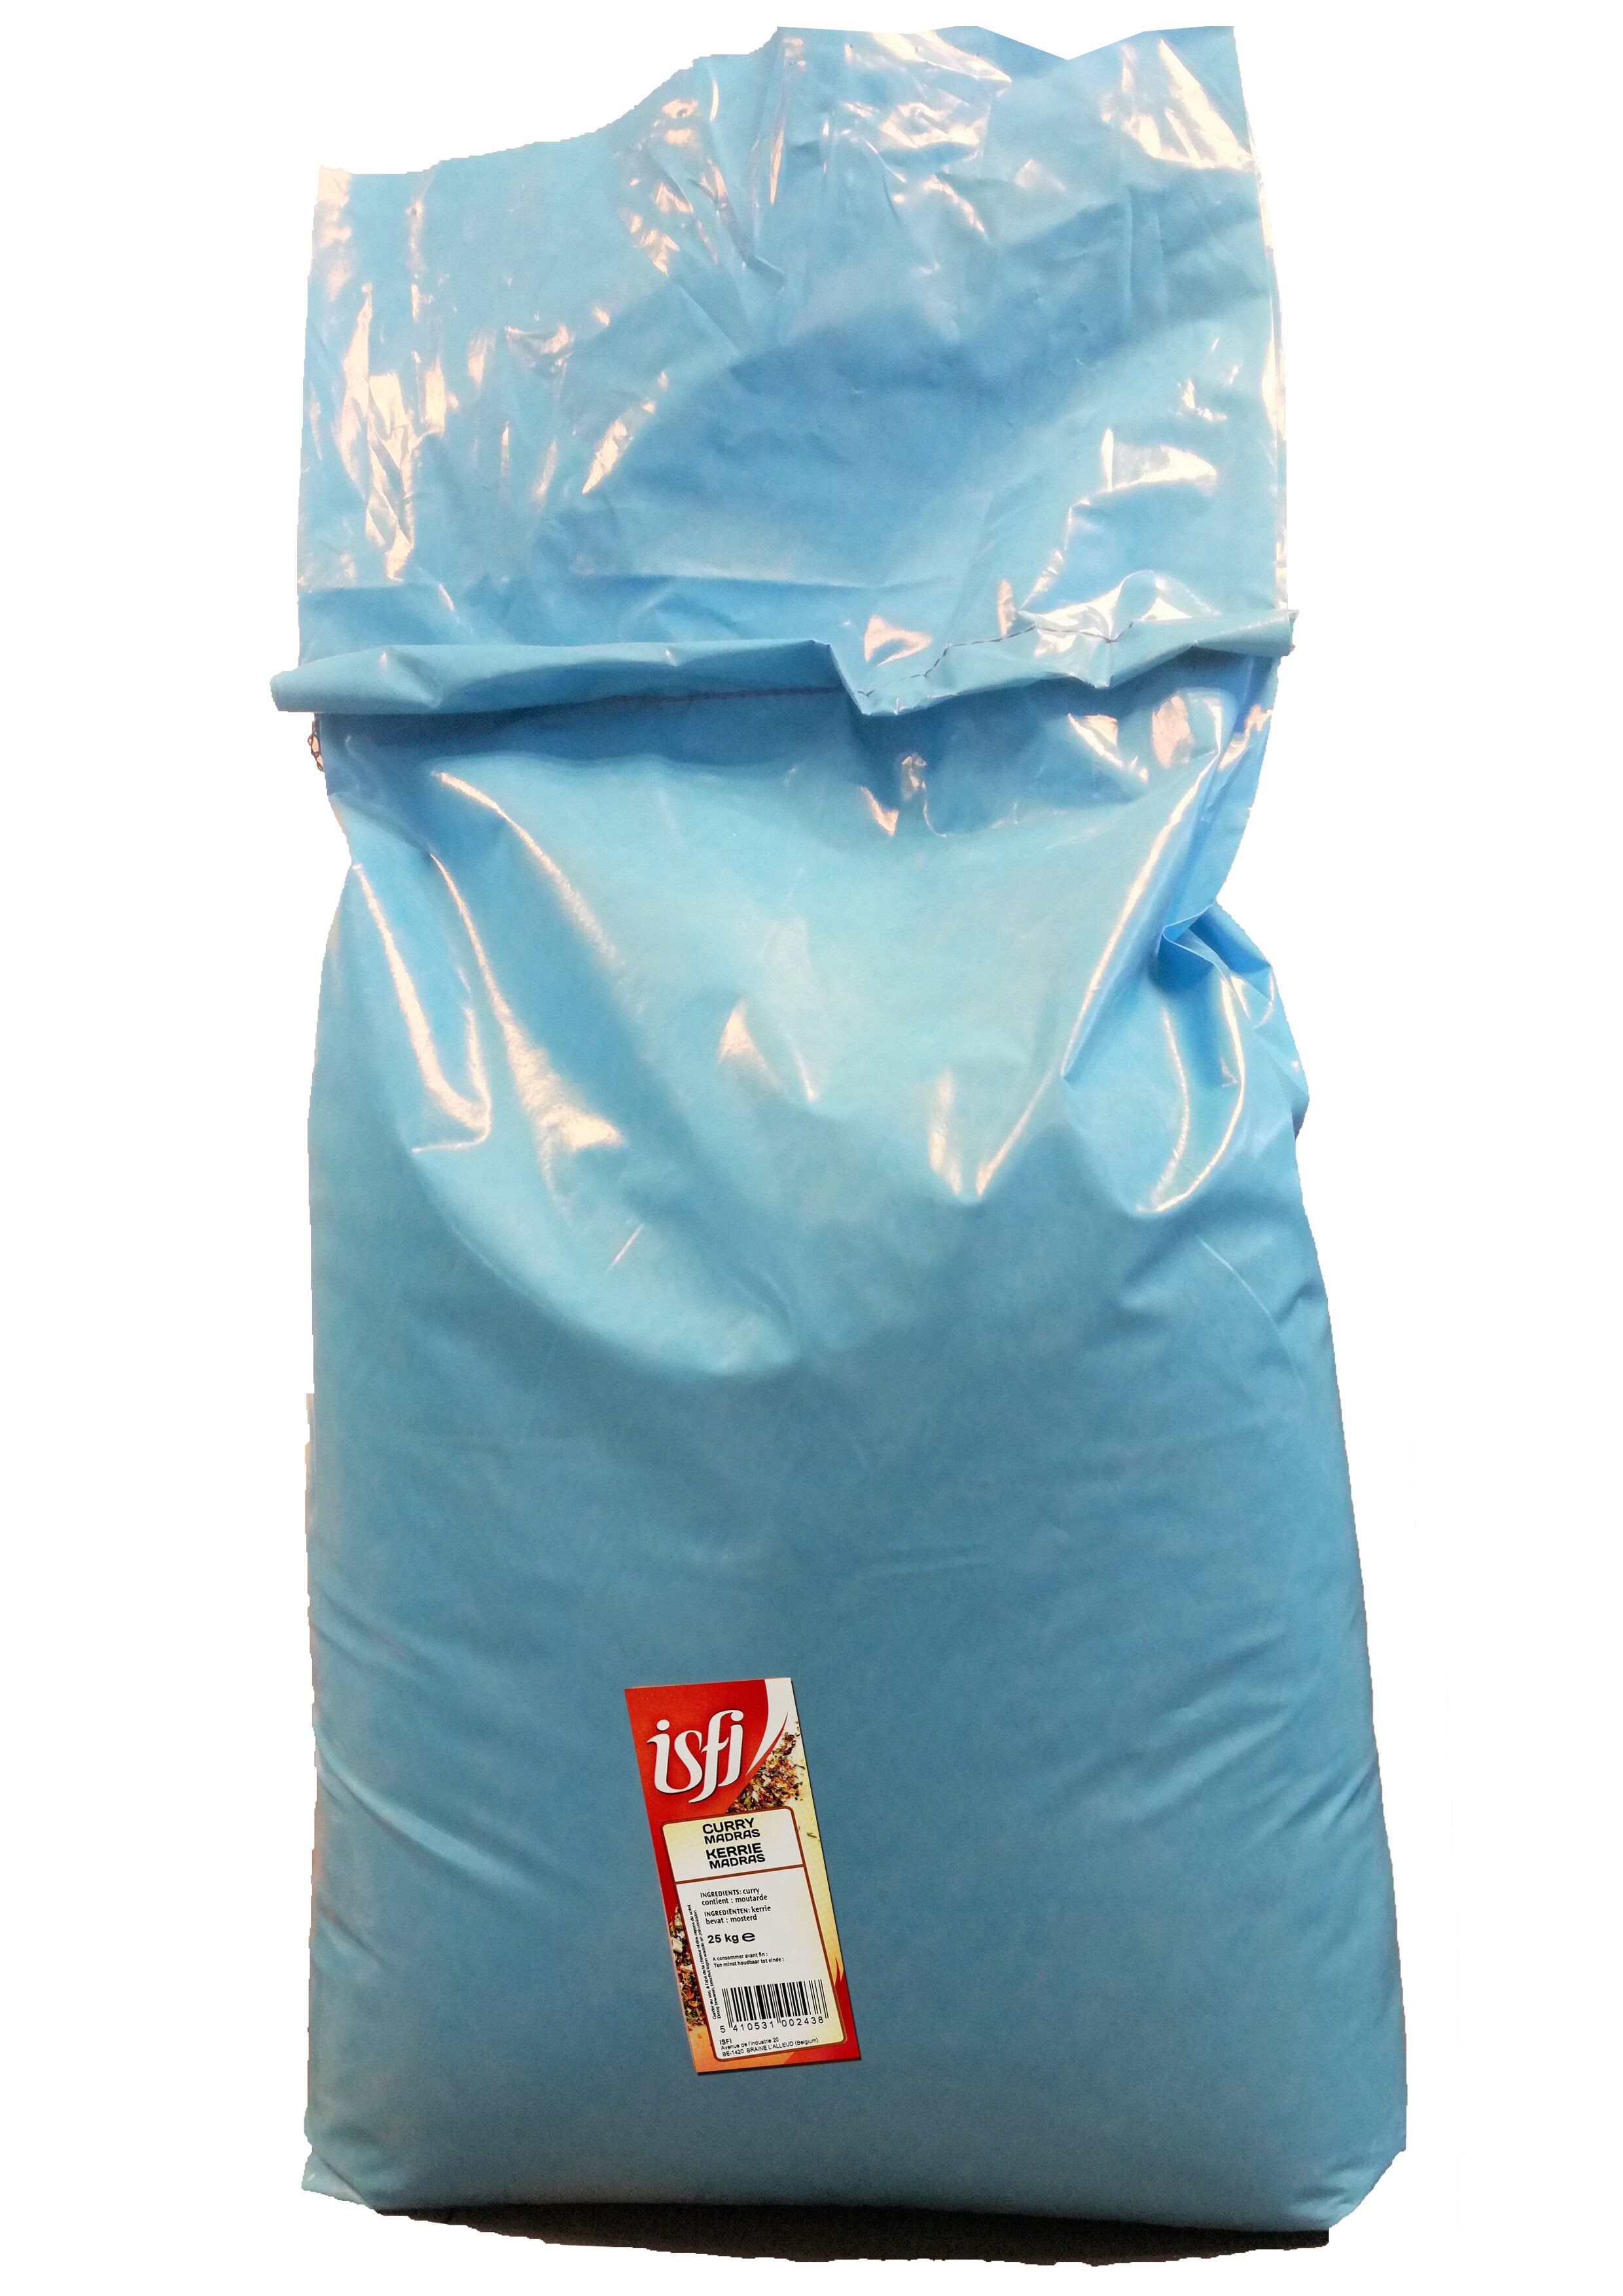 Isfi Spices Curry madras powder 25kg bag (Isfi & Verstegen)